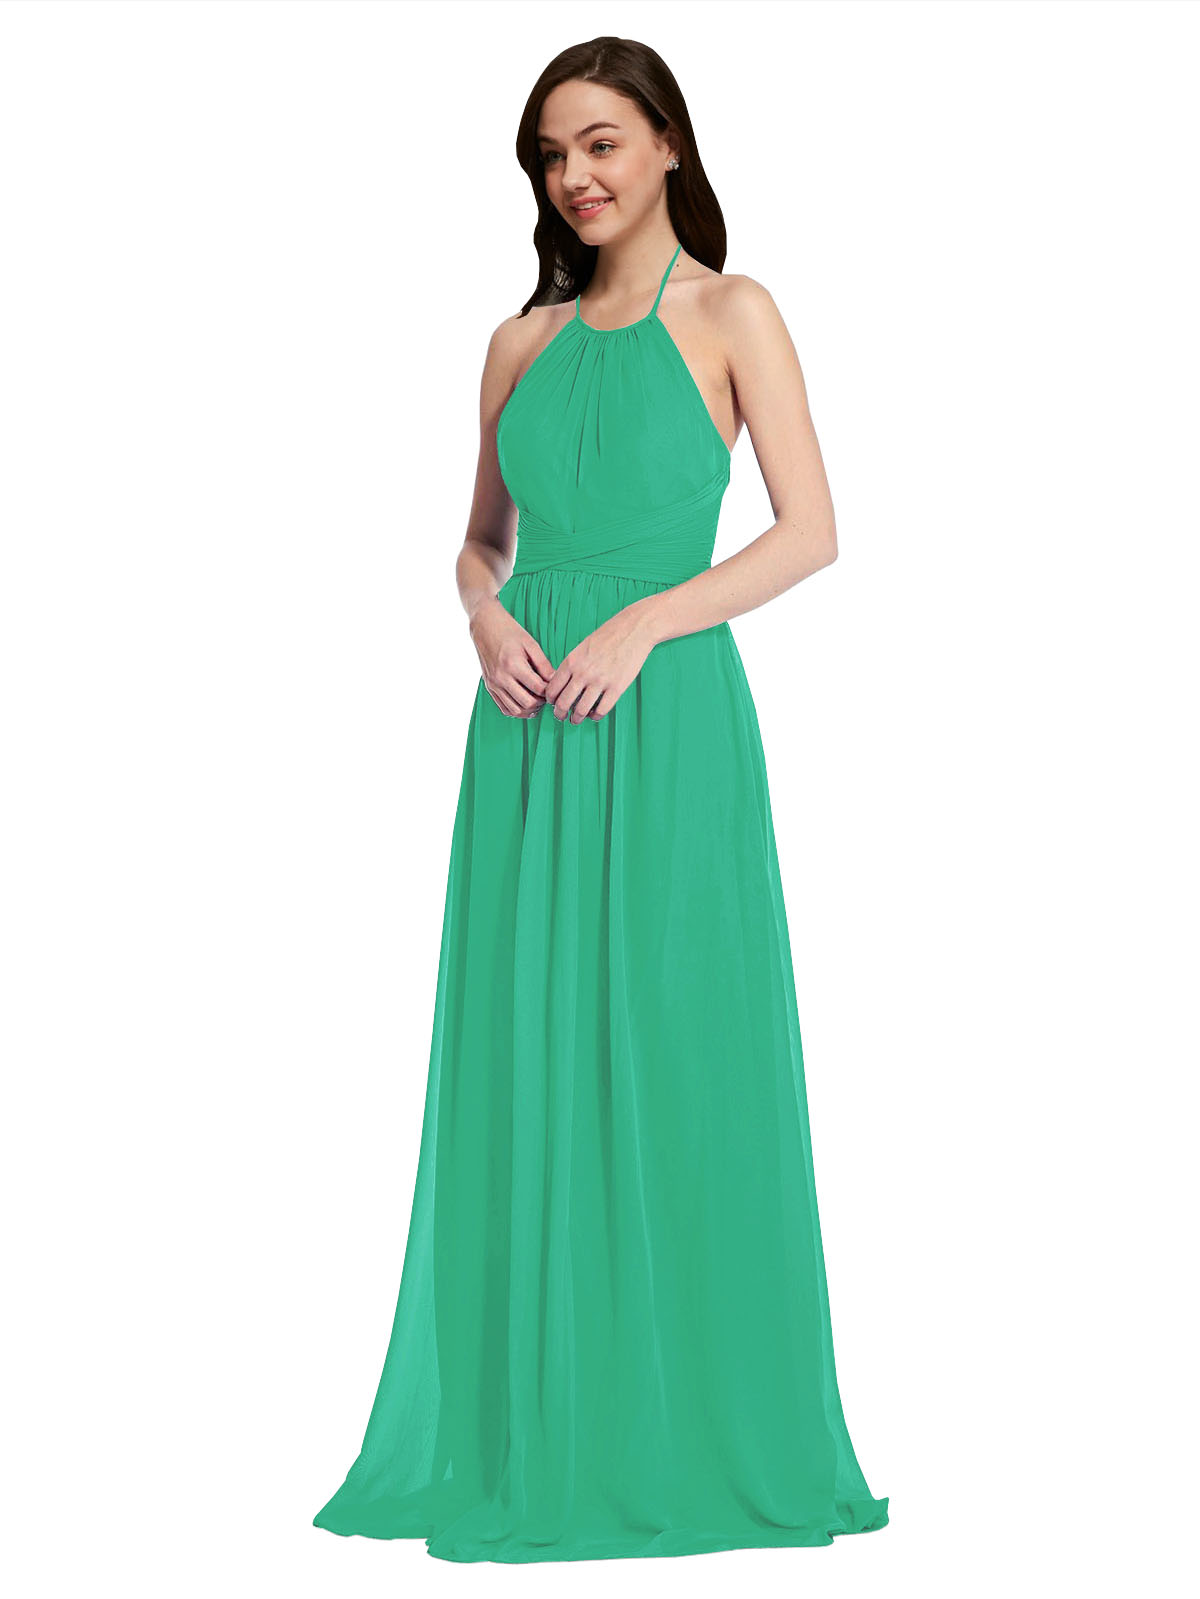 Long A-Line High Neck Halter Sleeveless Emerald Green Chiffon Bridesmaid Dress Larson